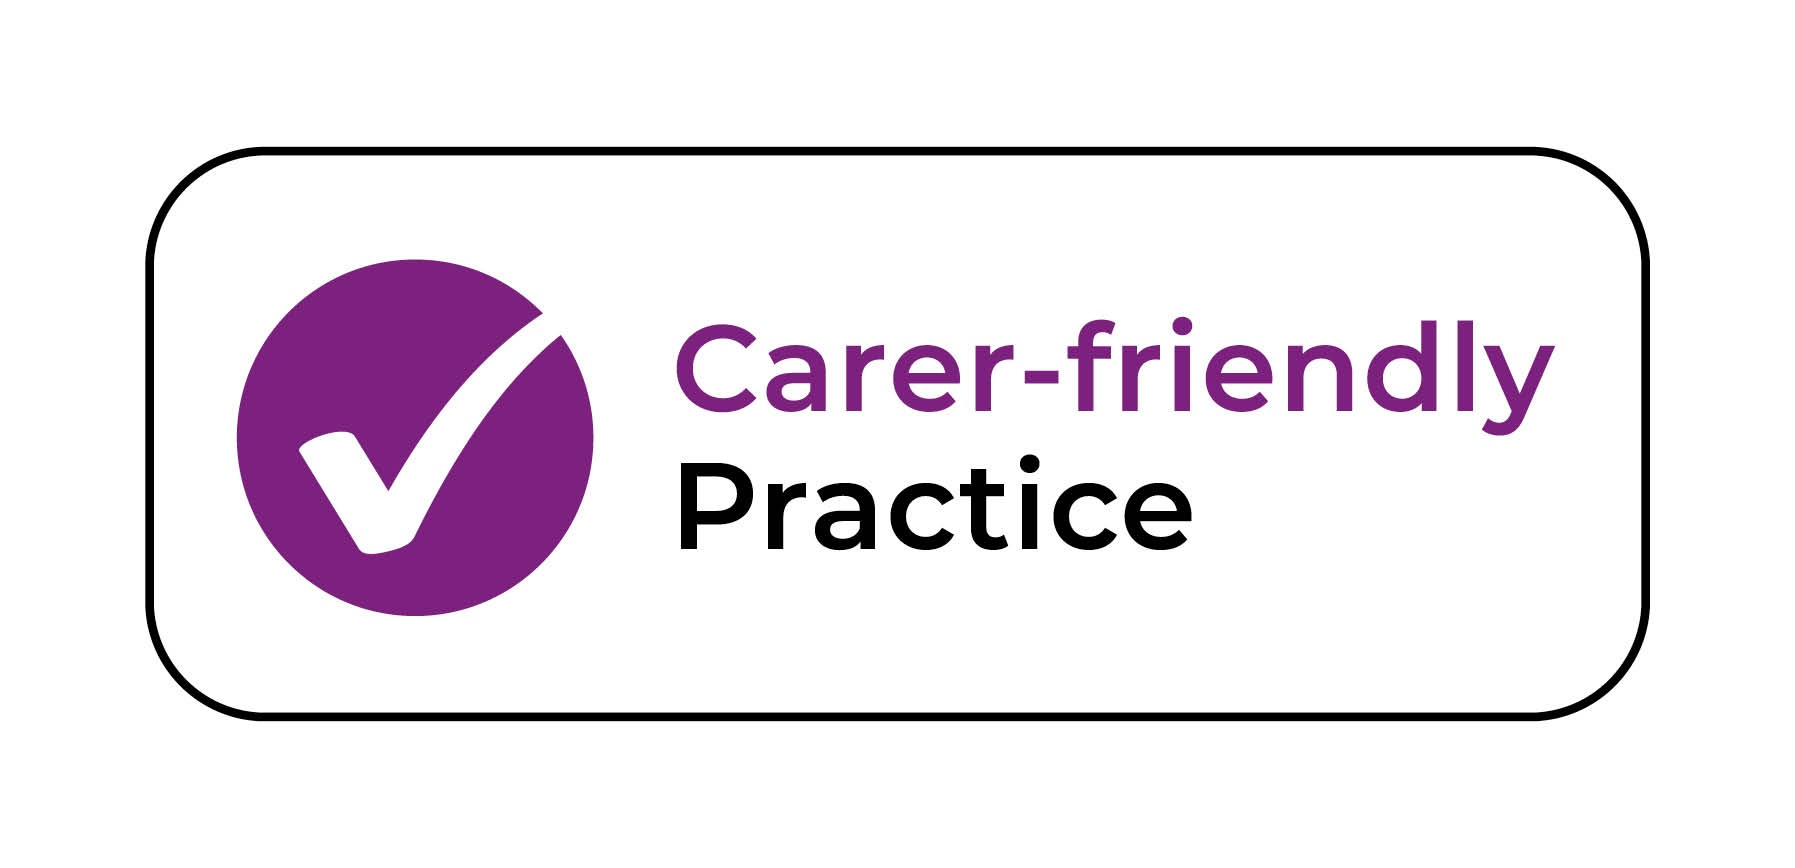 Carer friendly practice